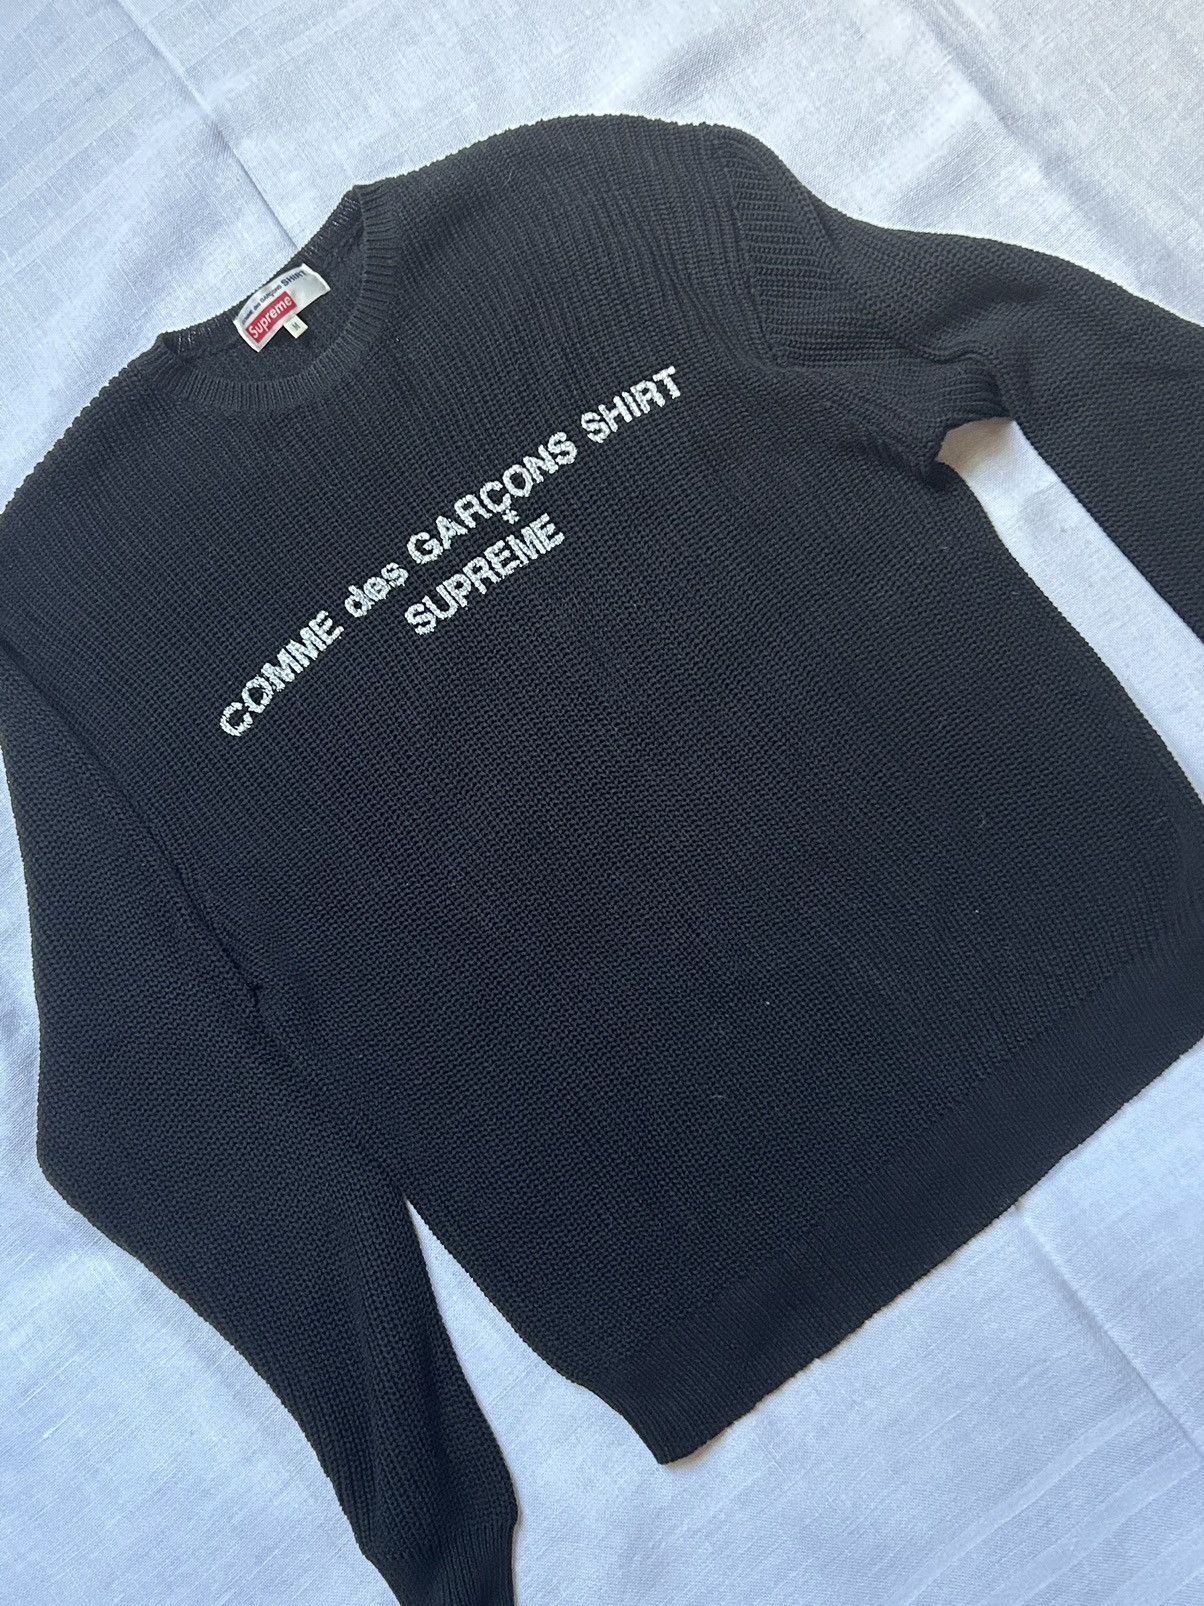 Supreme Supreme x cdg Comme Des Garcons Black Sweater M | Grailed